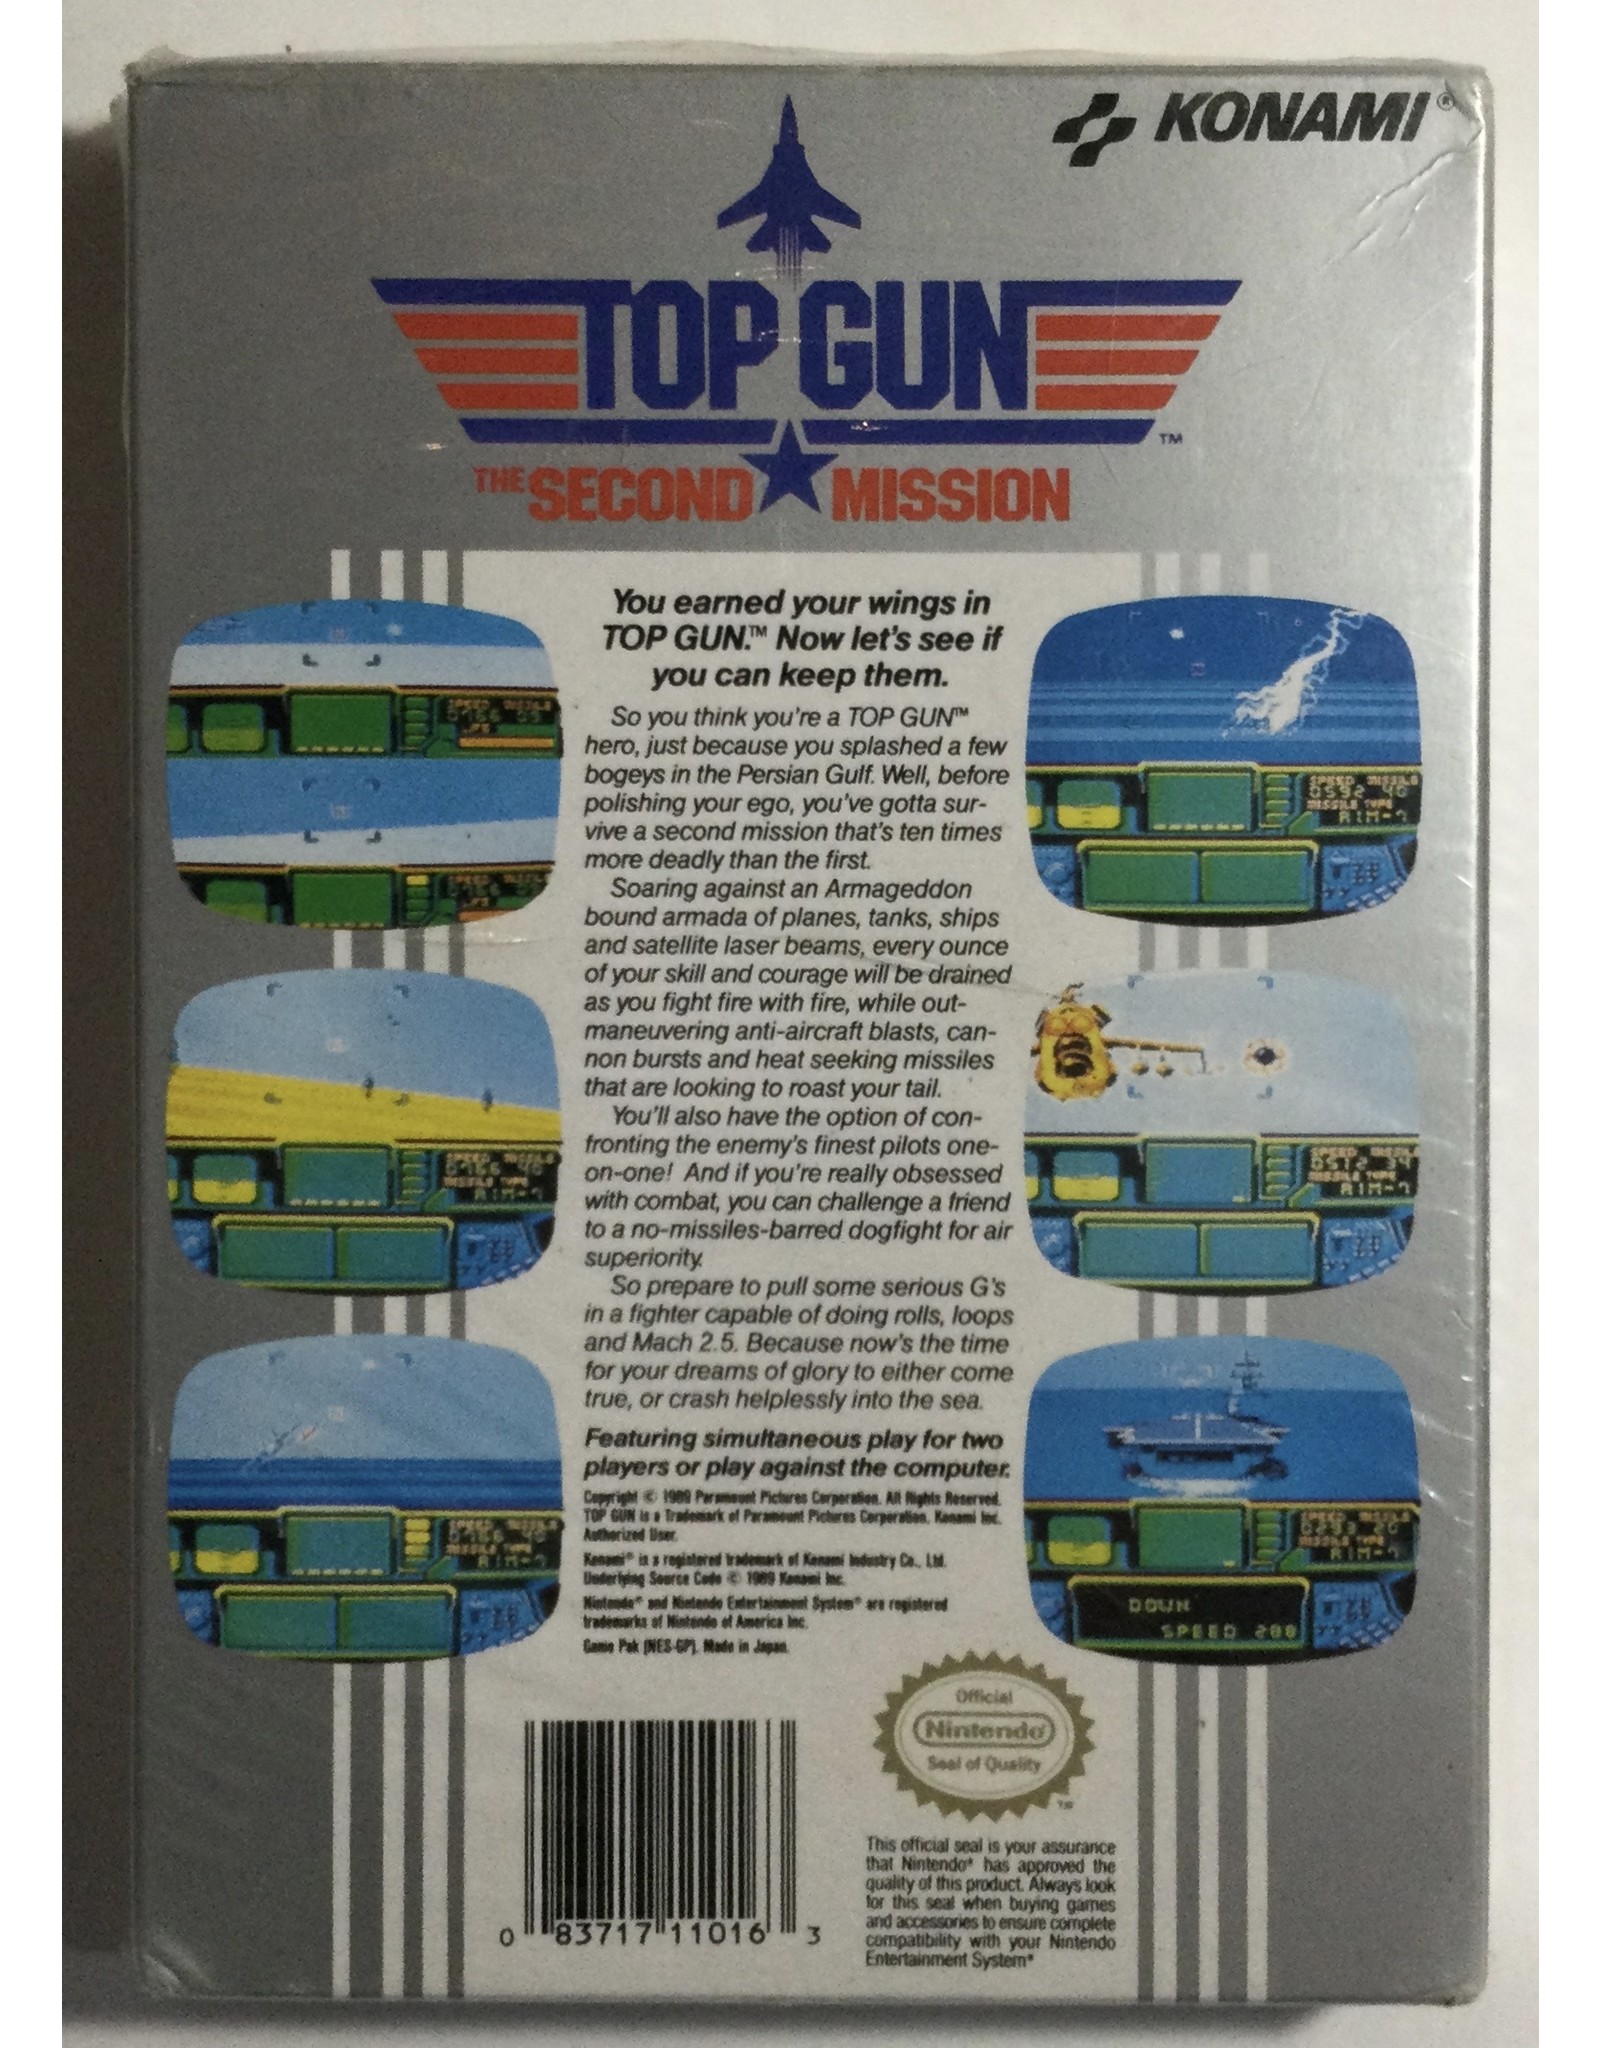 KONAMI Top Gun the Second Mission for Nintendo Entertainment System (NES)